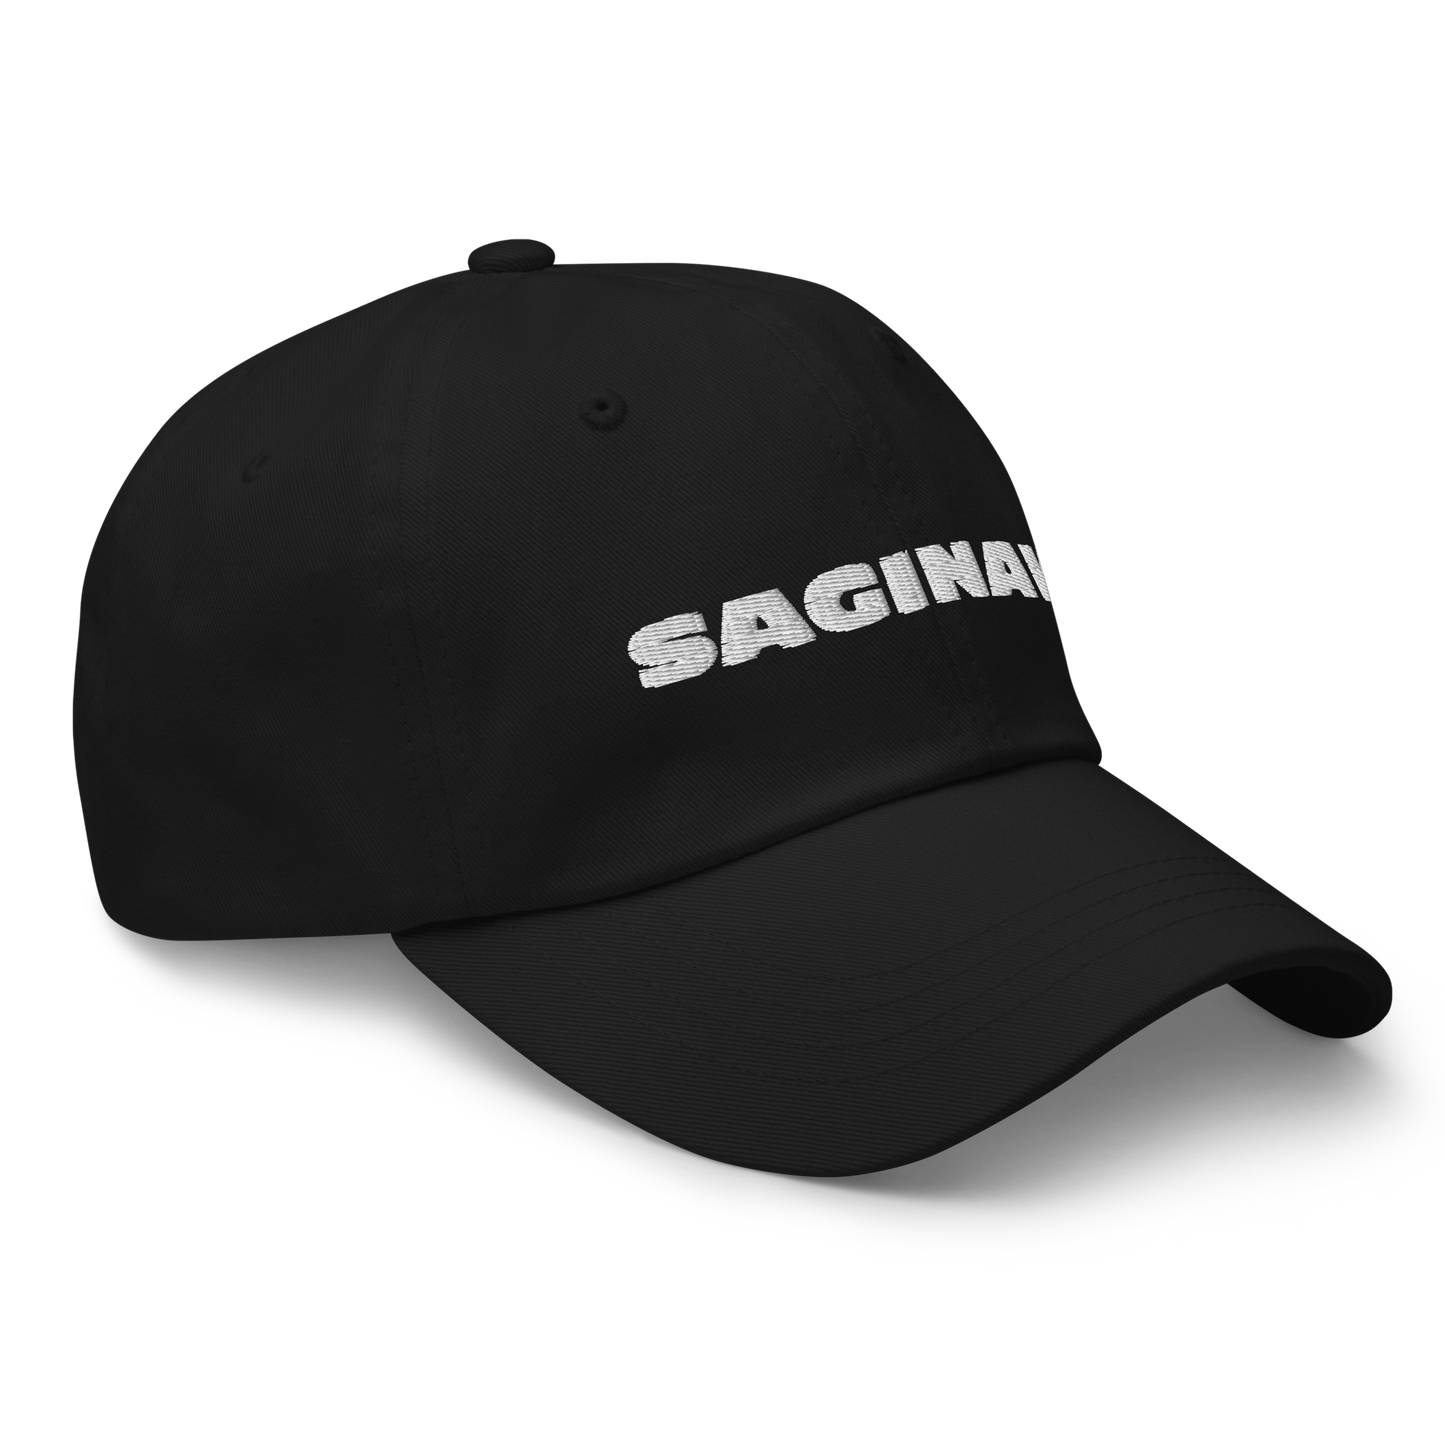 'Saginaw' Dad Hat | White/Black Embroidery